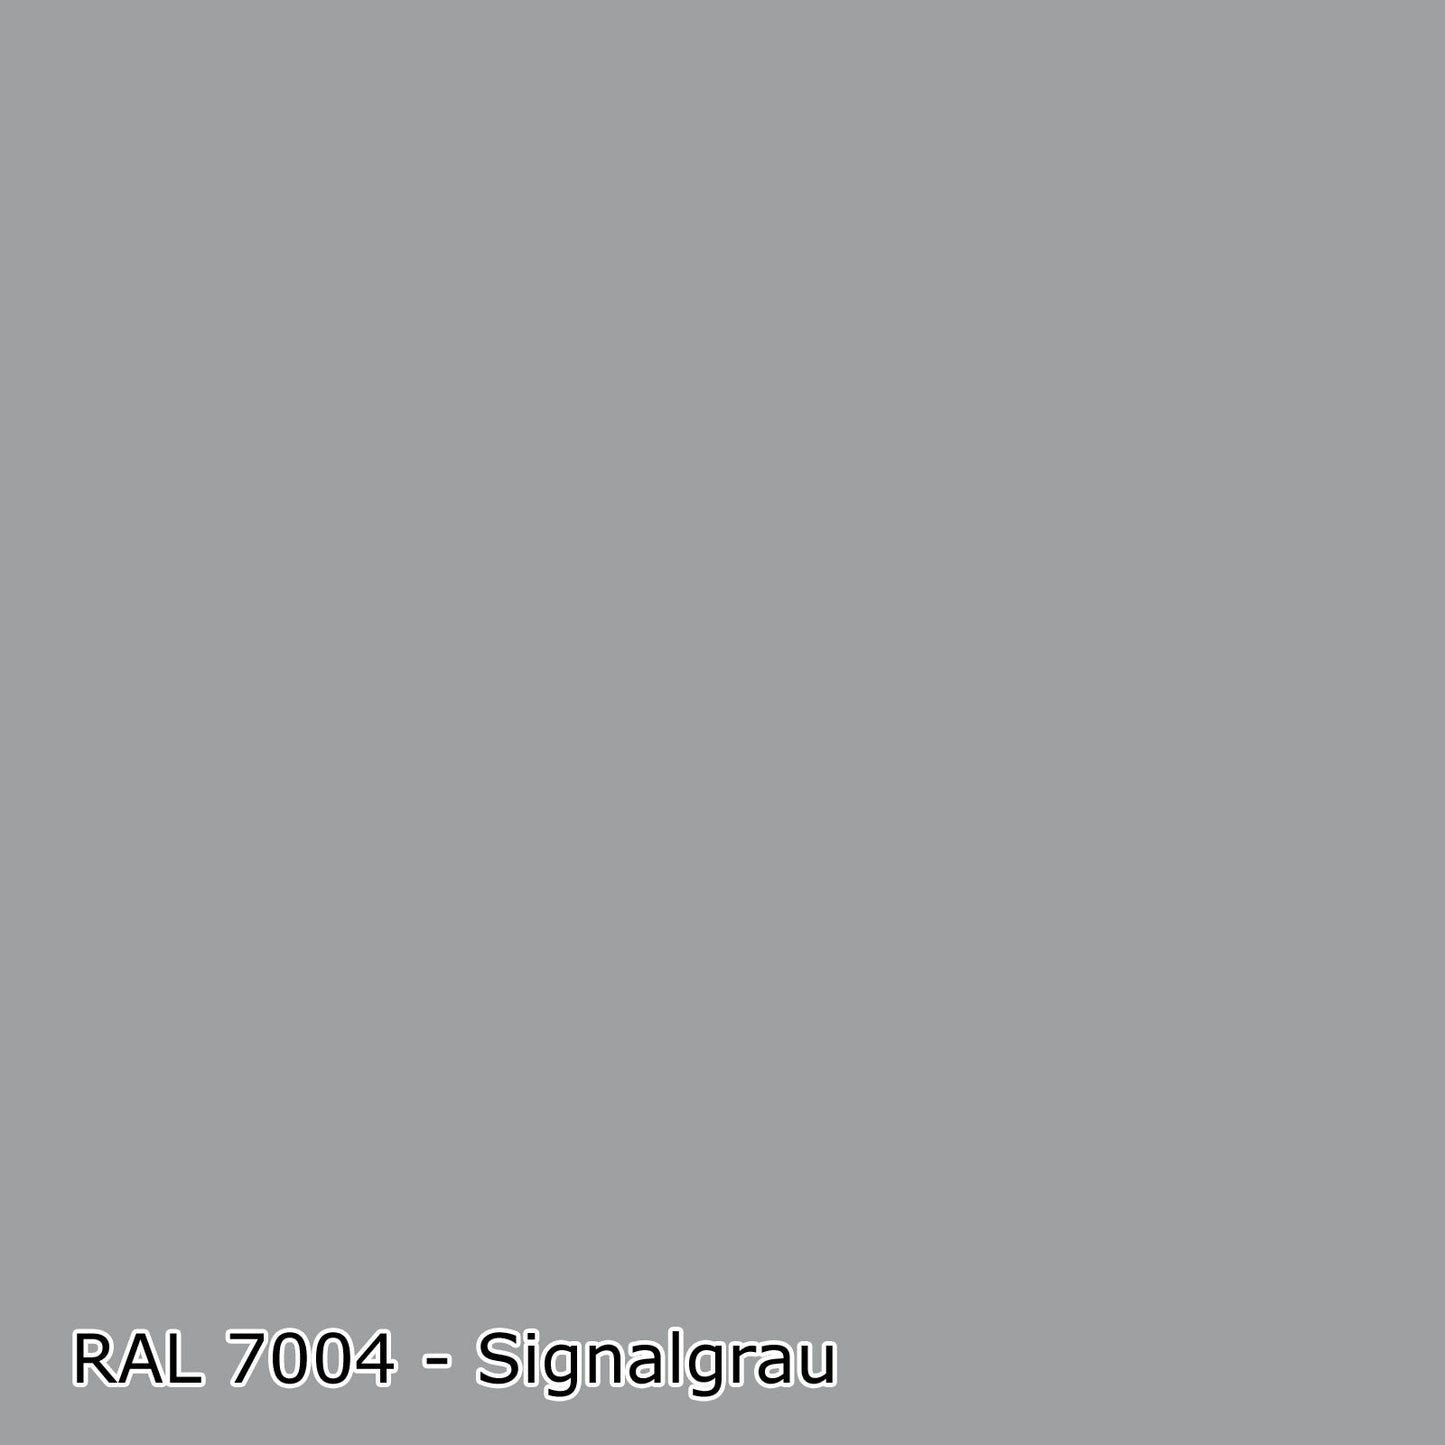 1 L Buntlack, Kunstharzlack, RAL Farbwahl - MATT (RAL 6010 - 9018)